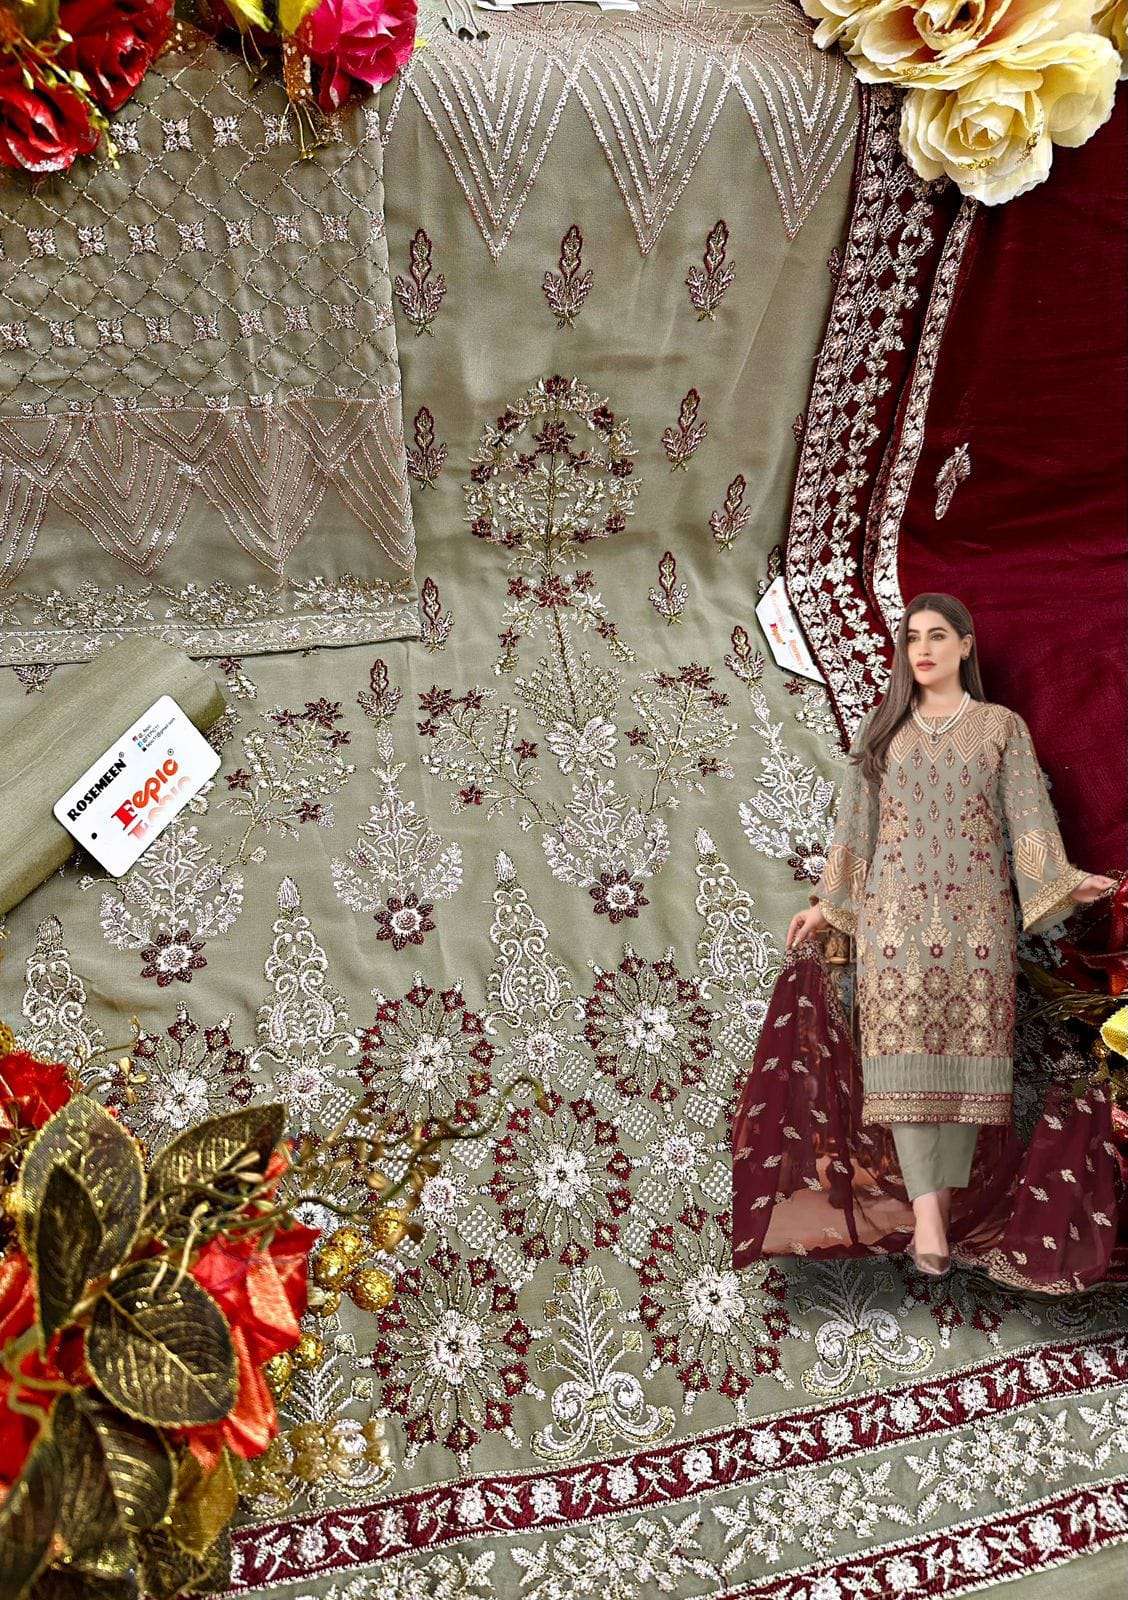 Rosemeen By Fepic Wholesale Online Salwar Suit Set